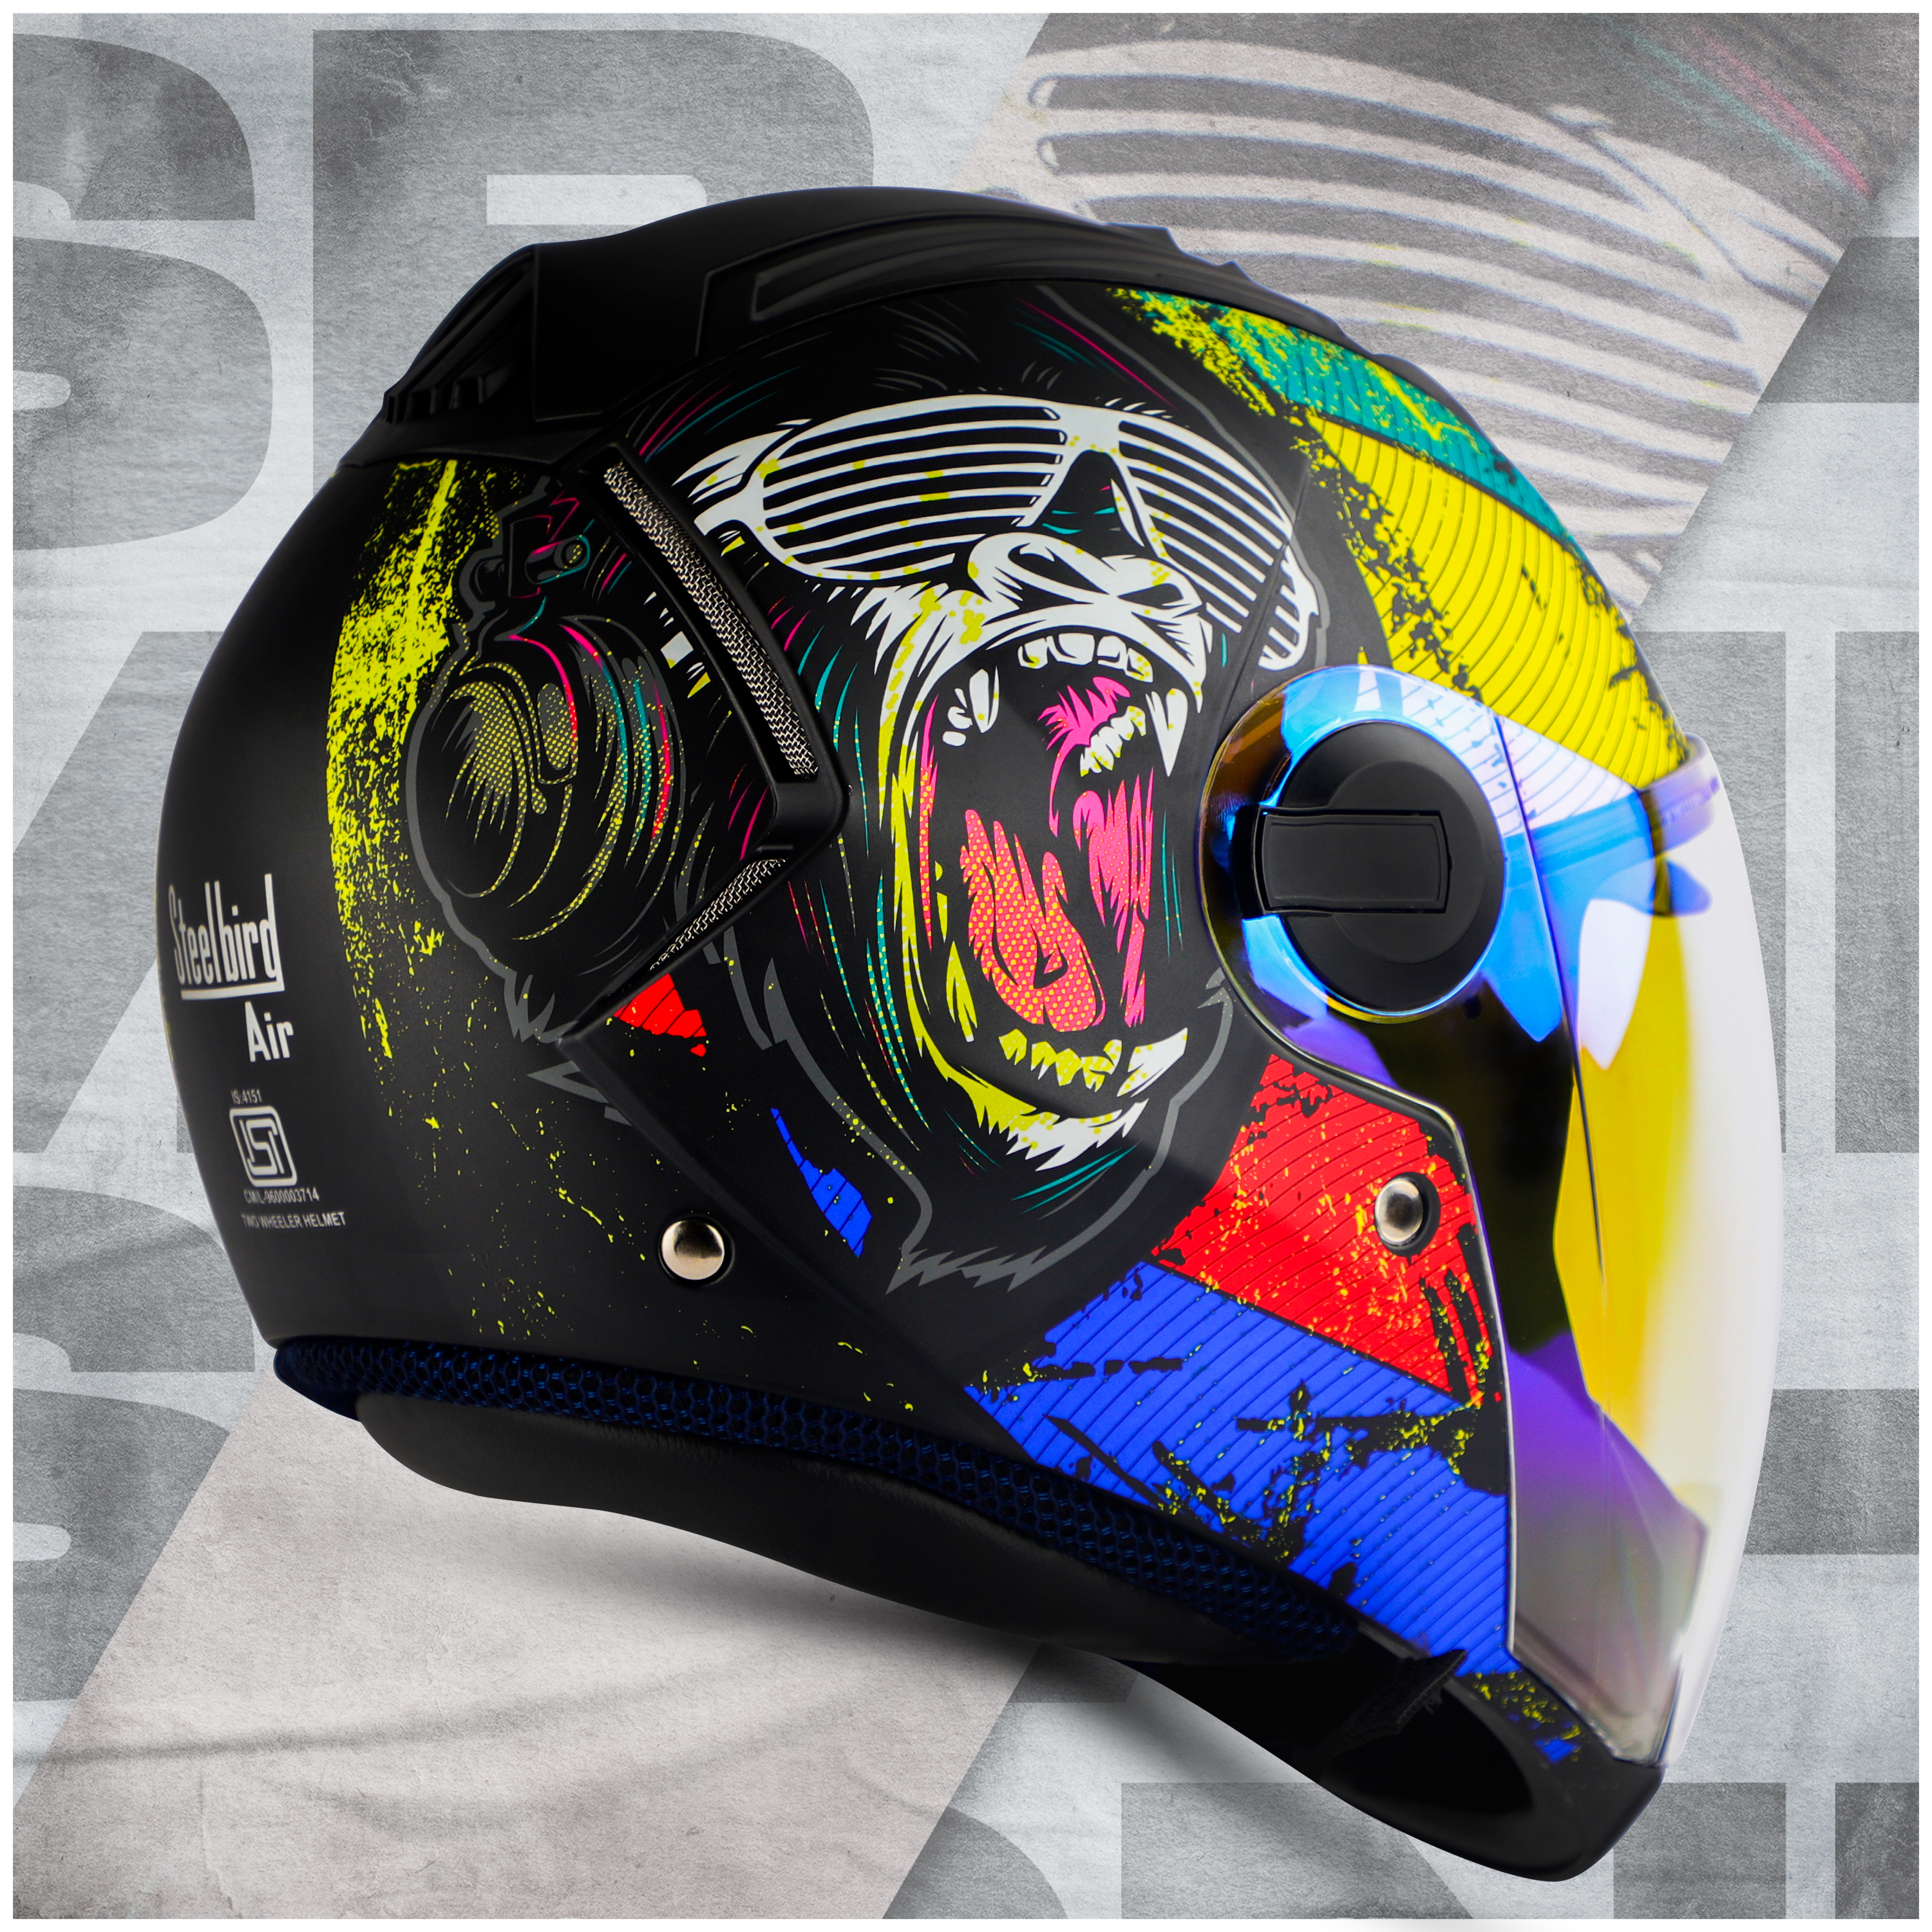 Steelbird SBA-2 Monkey ISI Certified Full Face Photochromic Graphic Helmet For Men And Women (Glossy Blue With Night Vision Blue Visor)